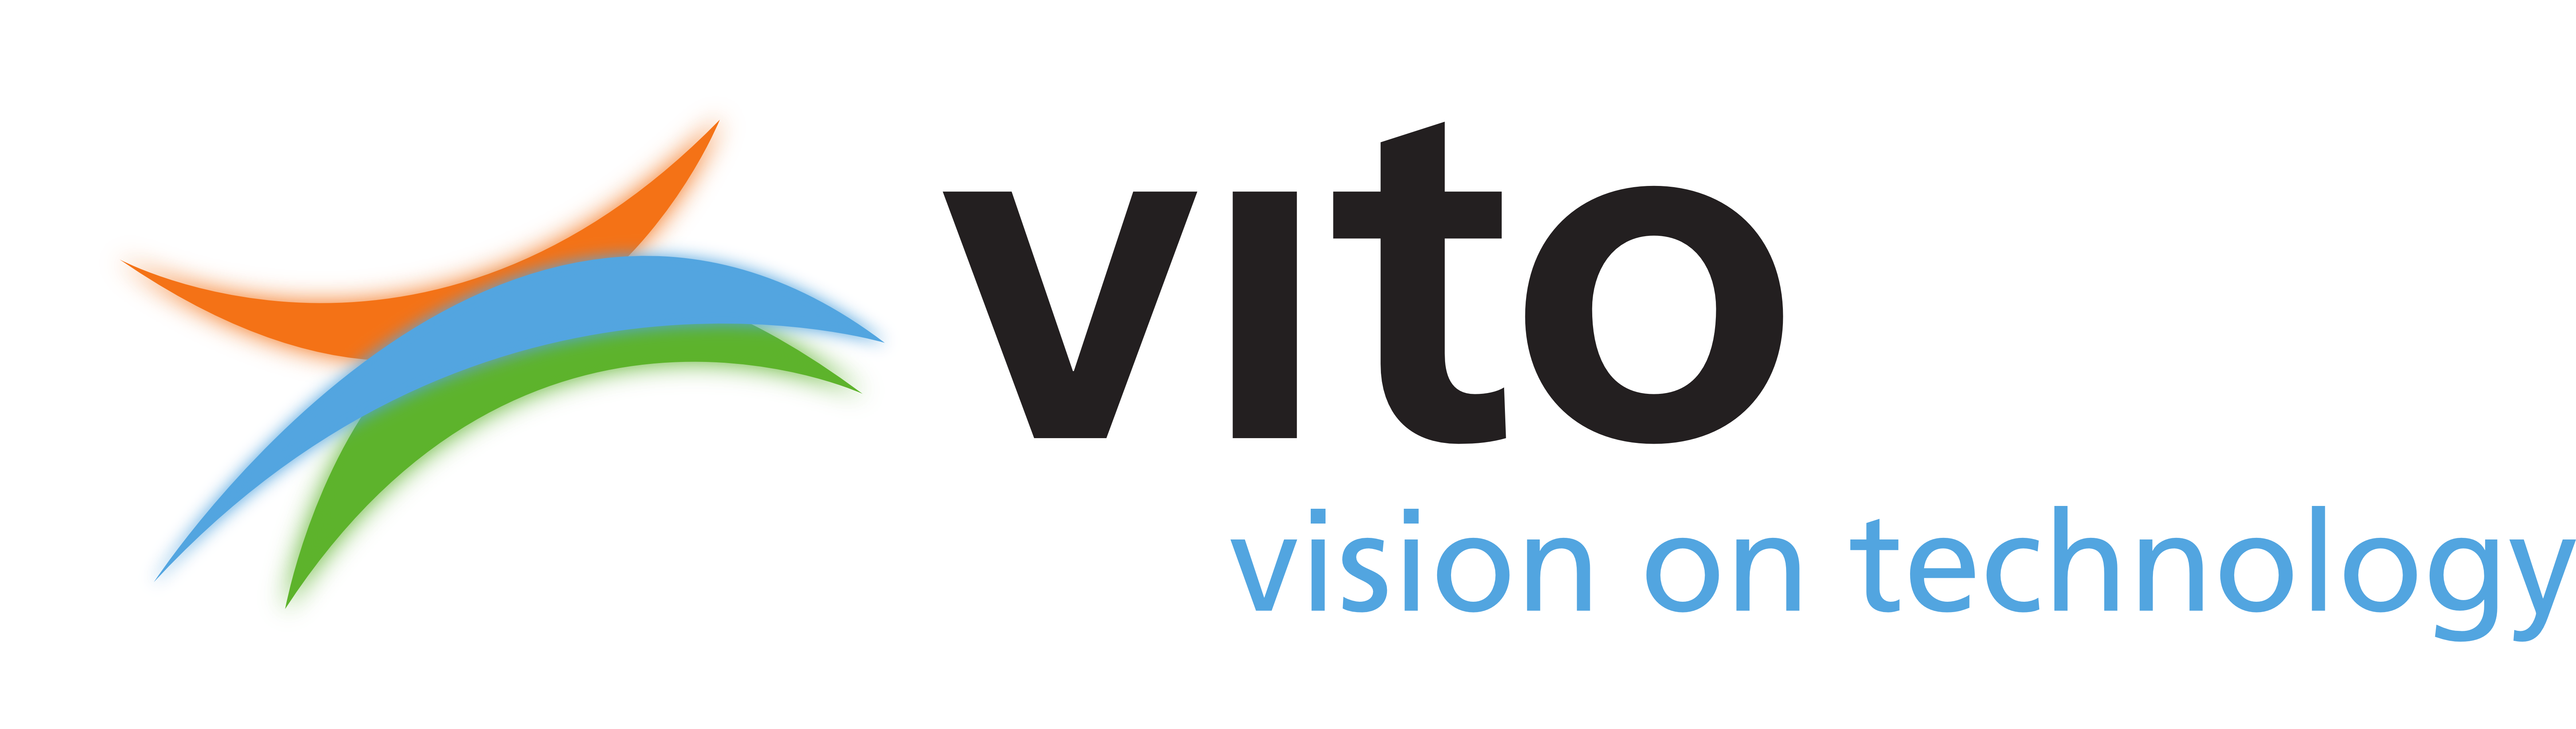 VITO is a present partner